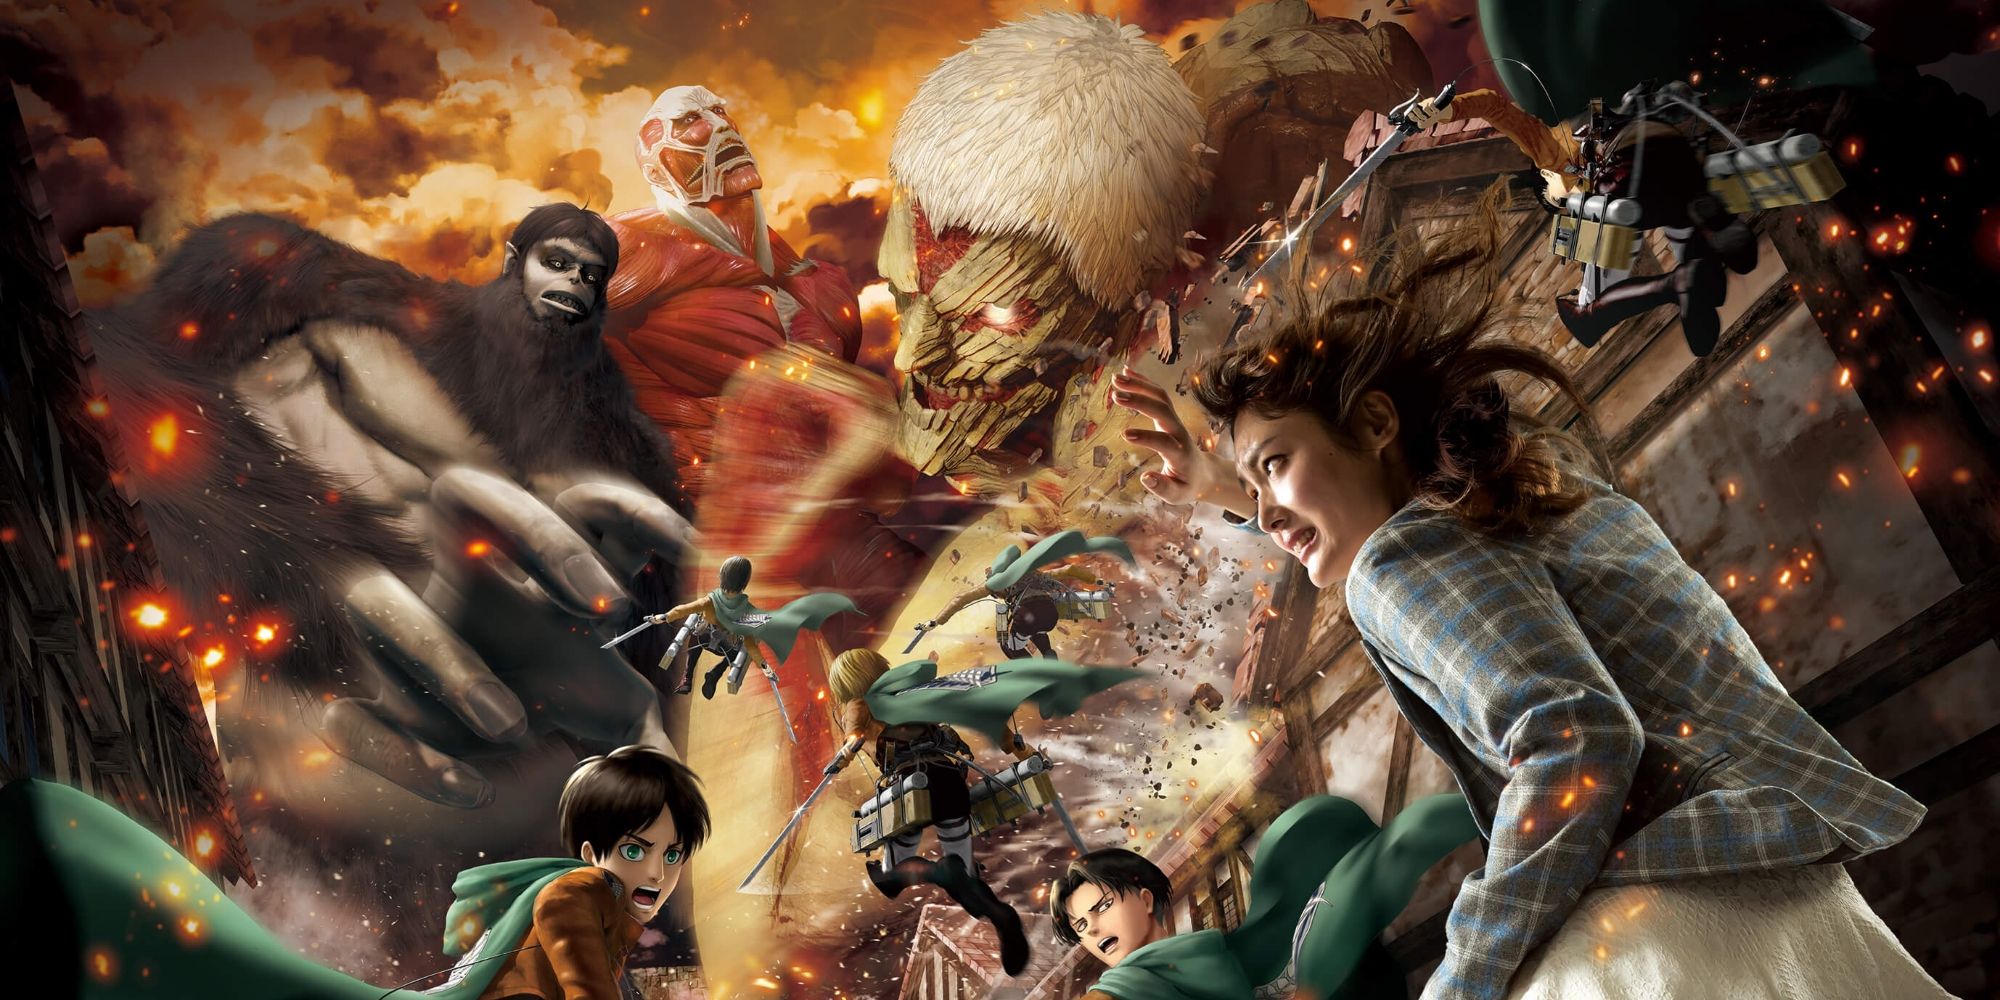 Japans Attack On Titan Theme Park Is Giant Fun